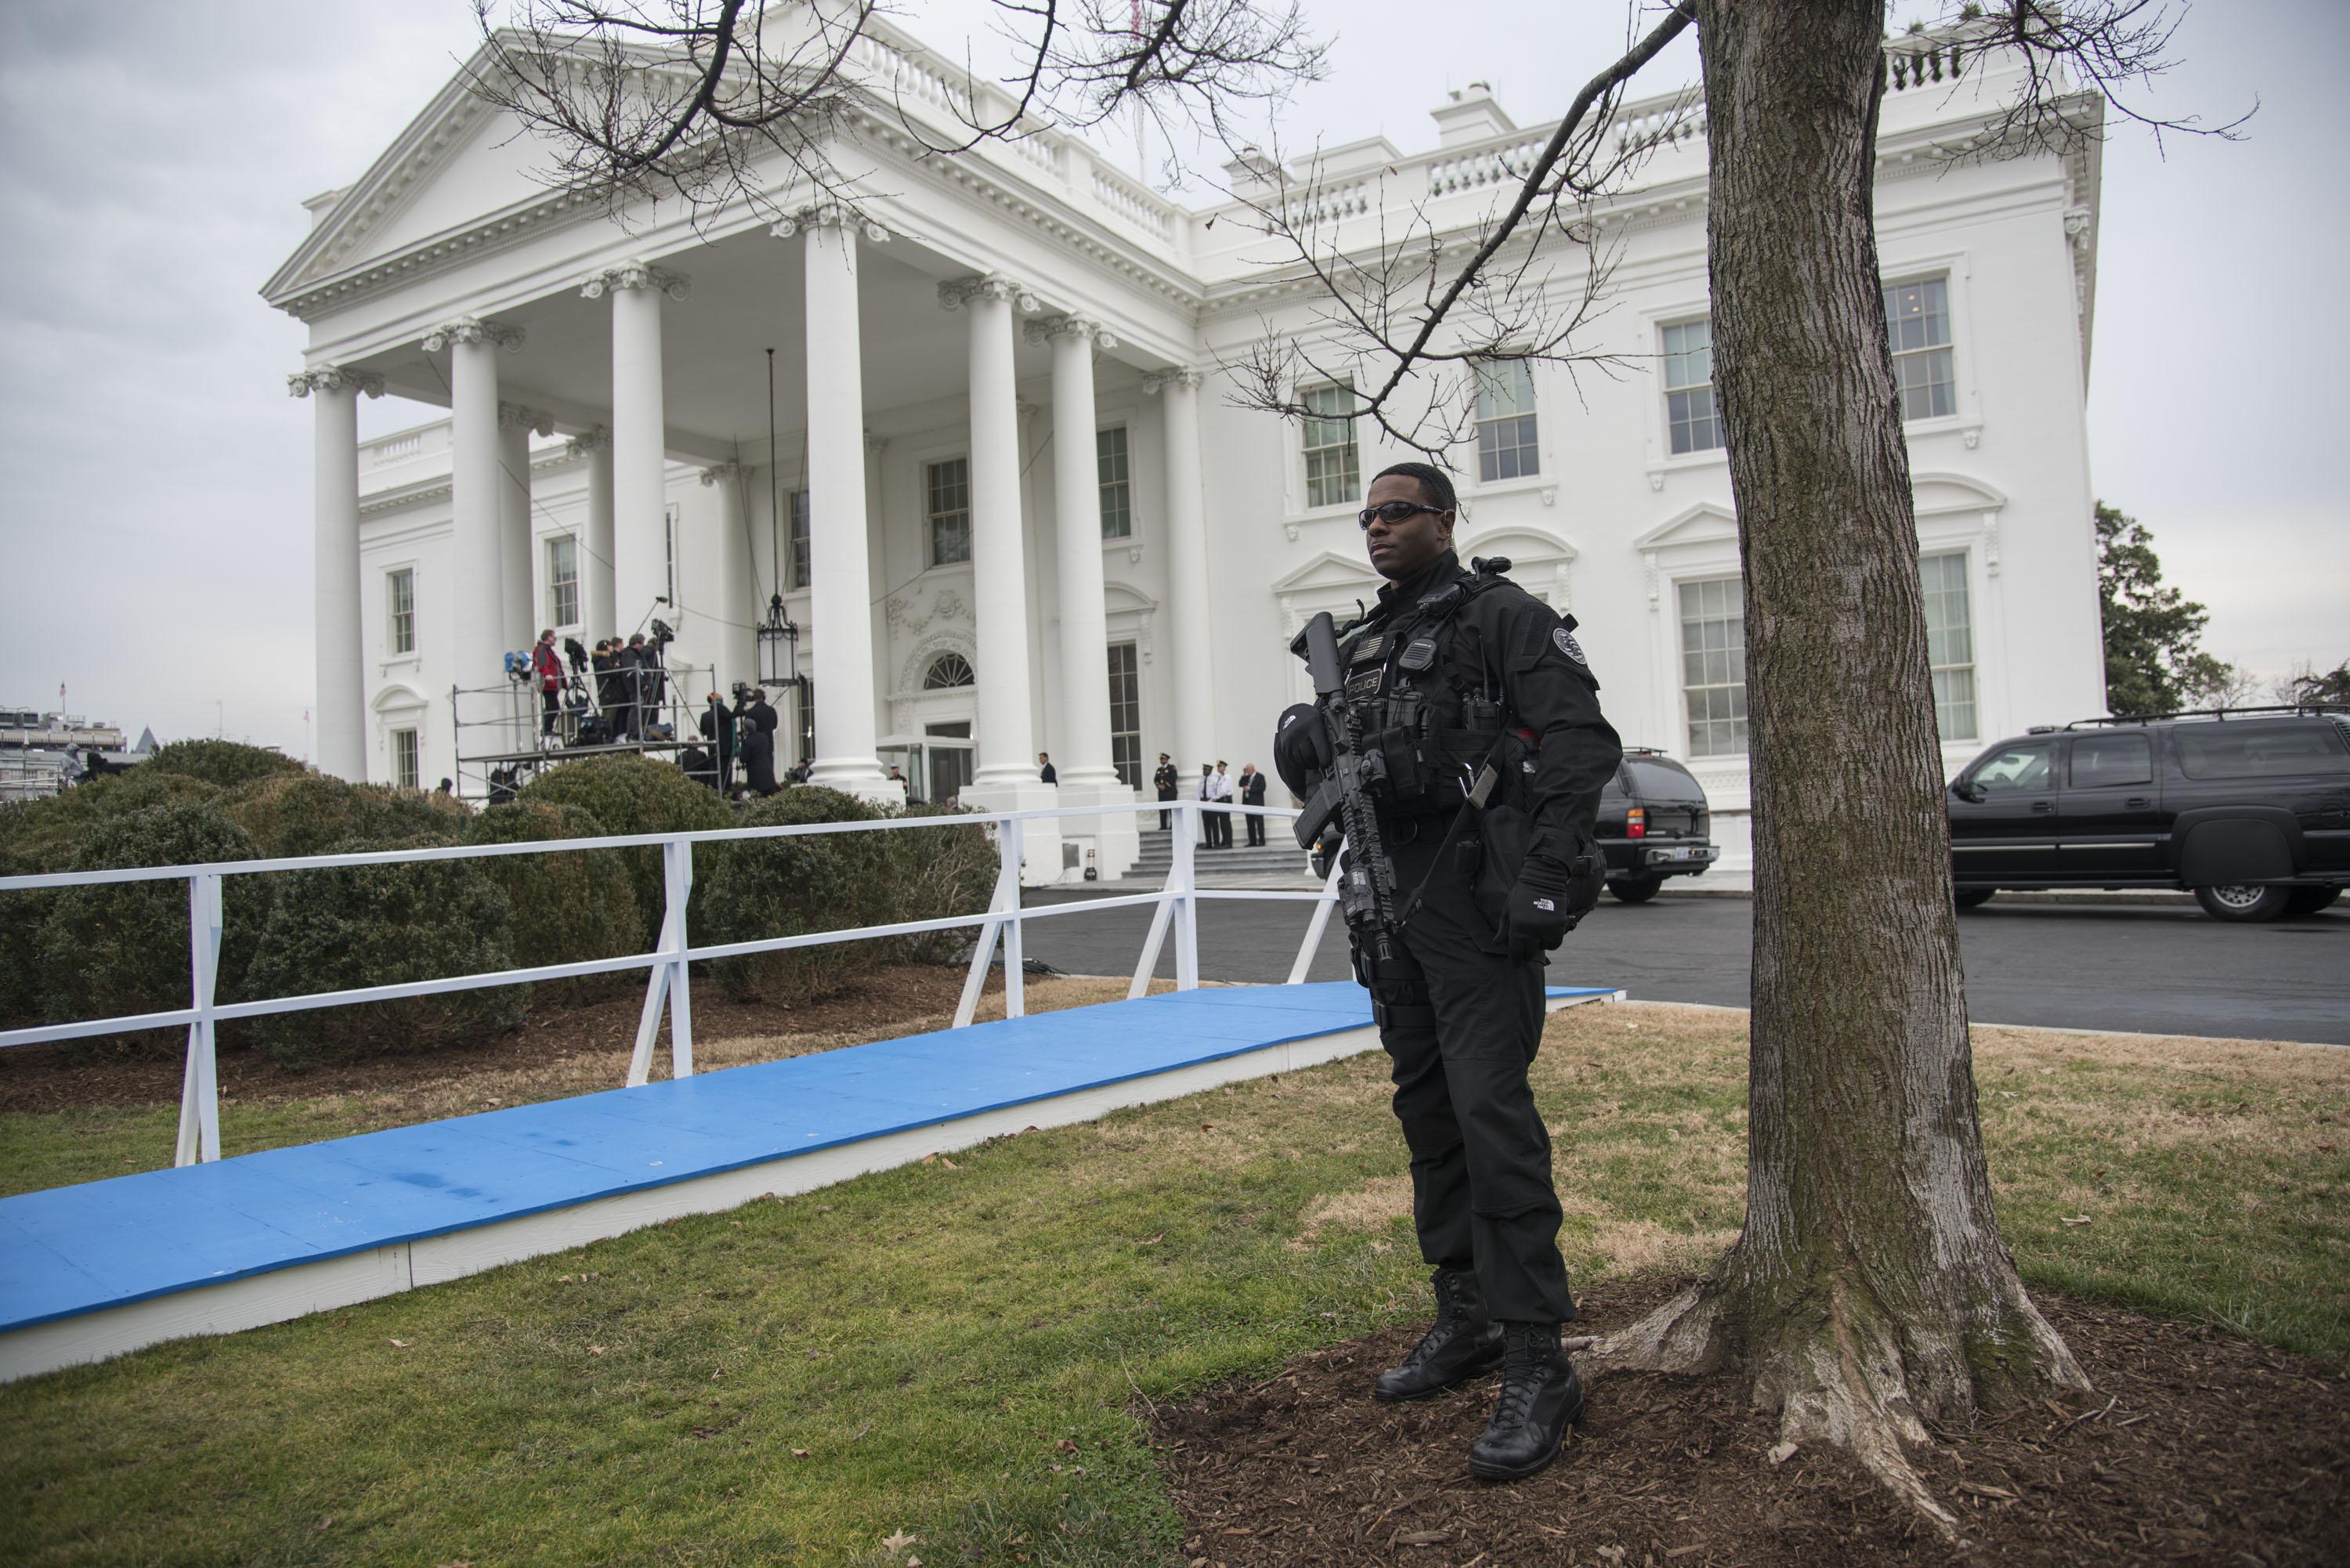 Miembro del Servicio Secreto custodiando la Casa Blanca - US Secret Service